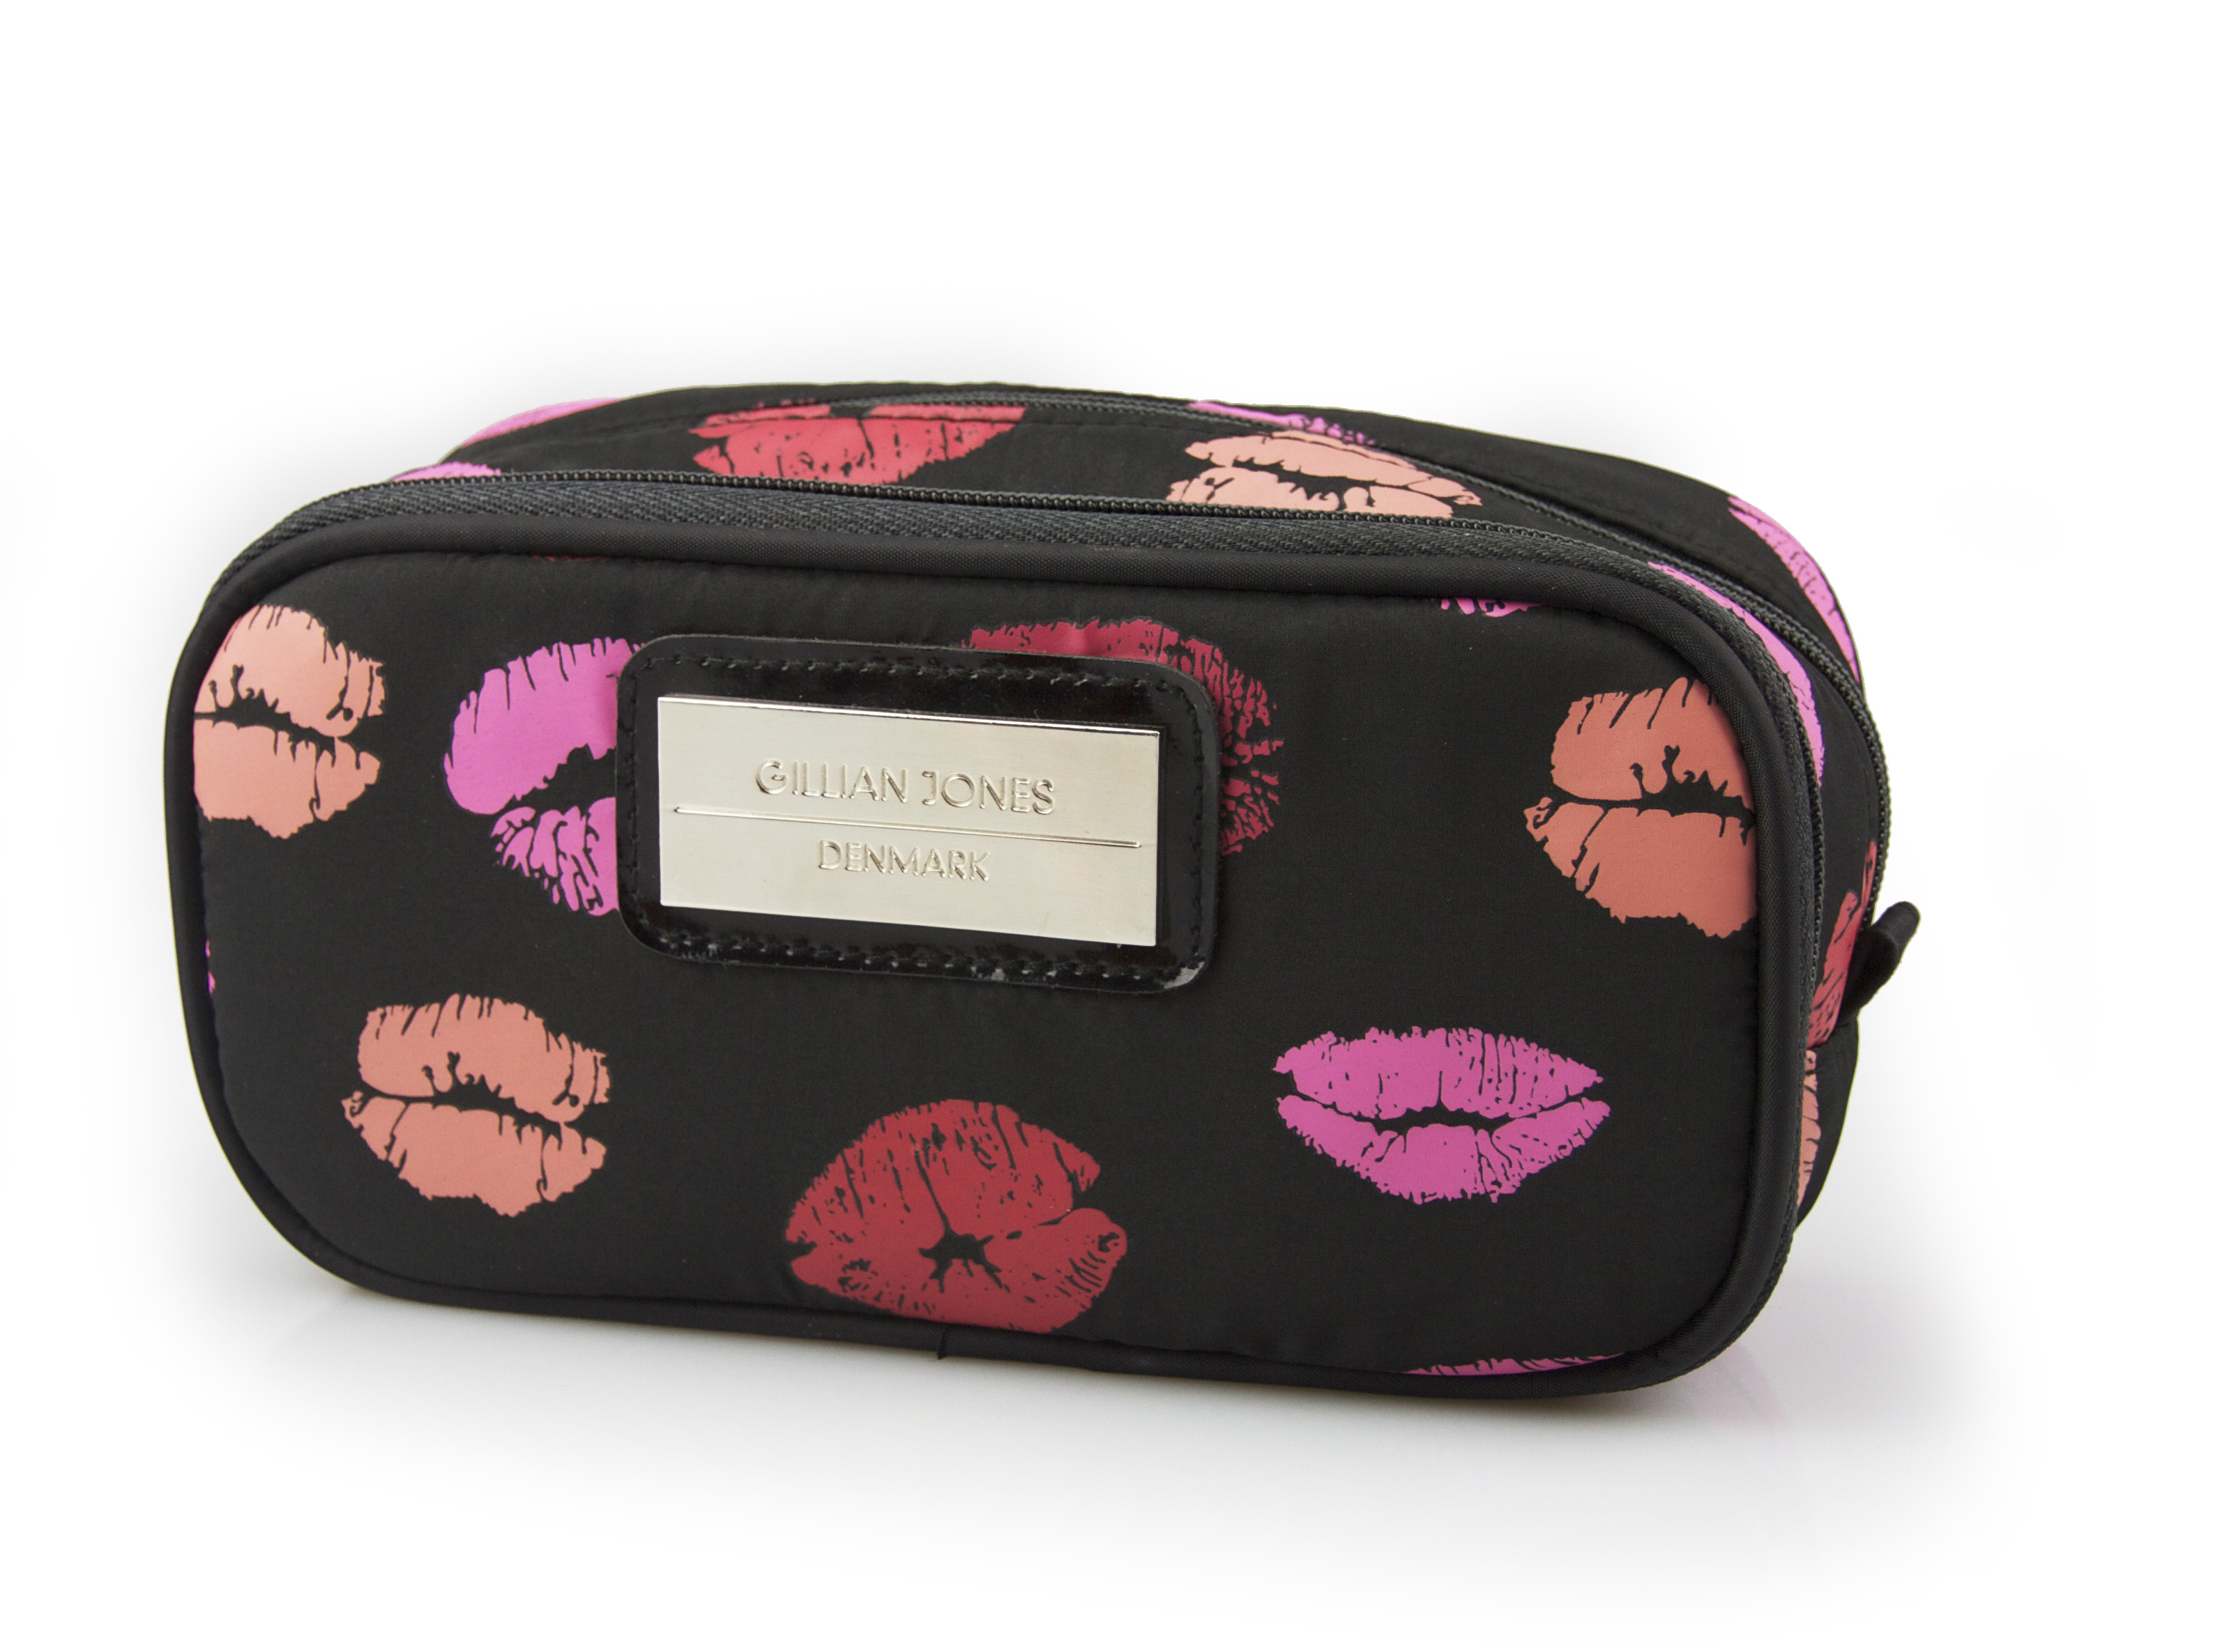 Cimi Beauty Bags MakeUp Purse 2 Zipper/Compartments